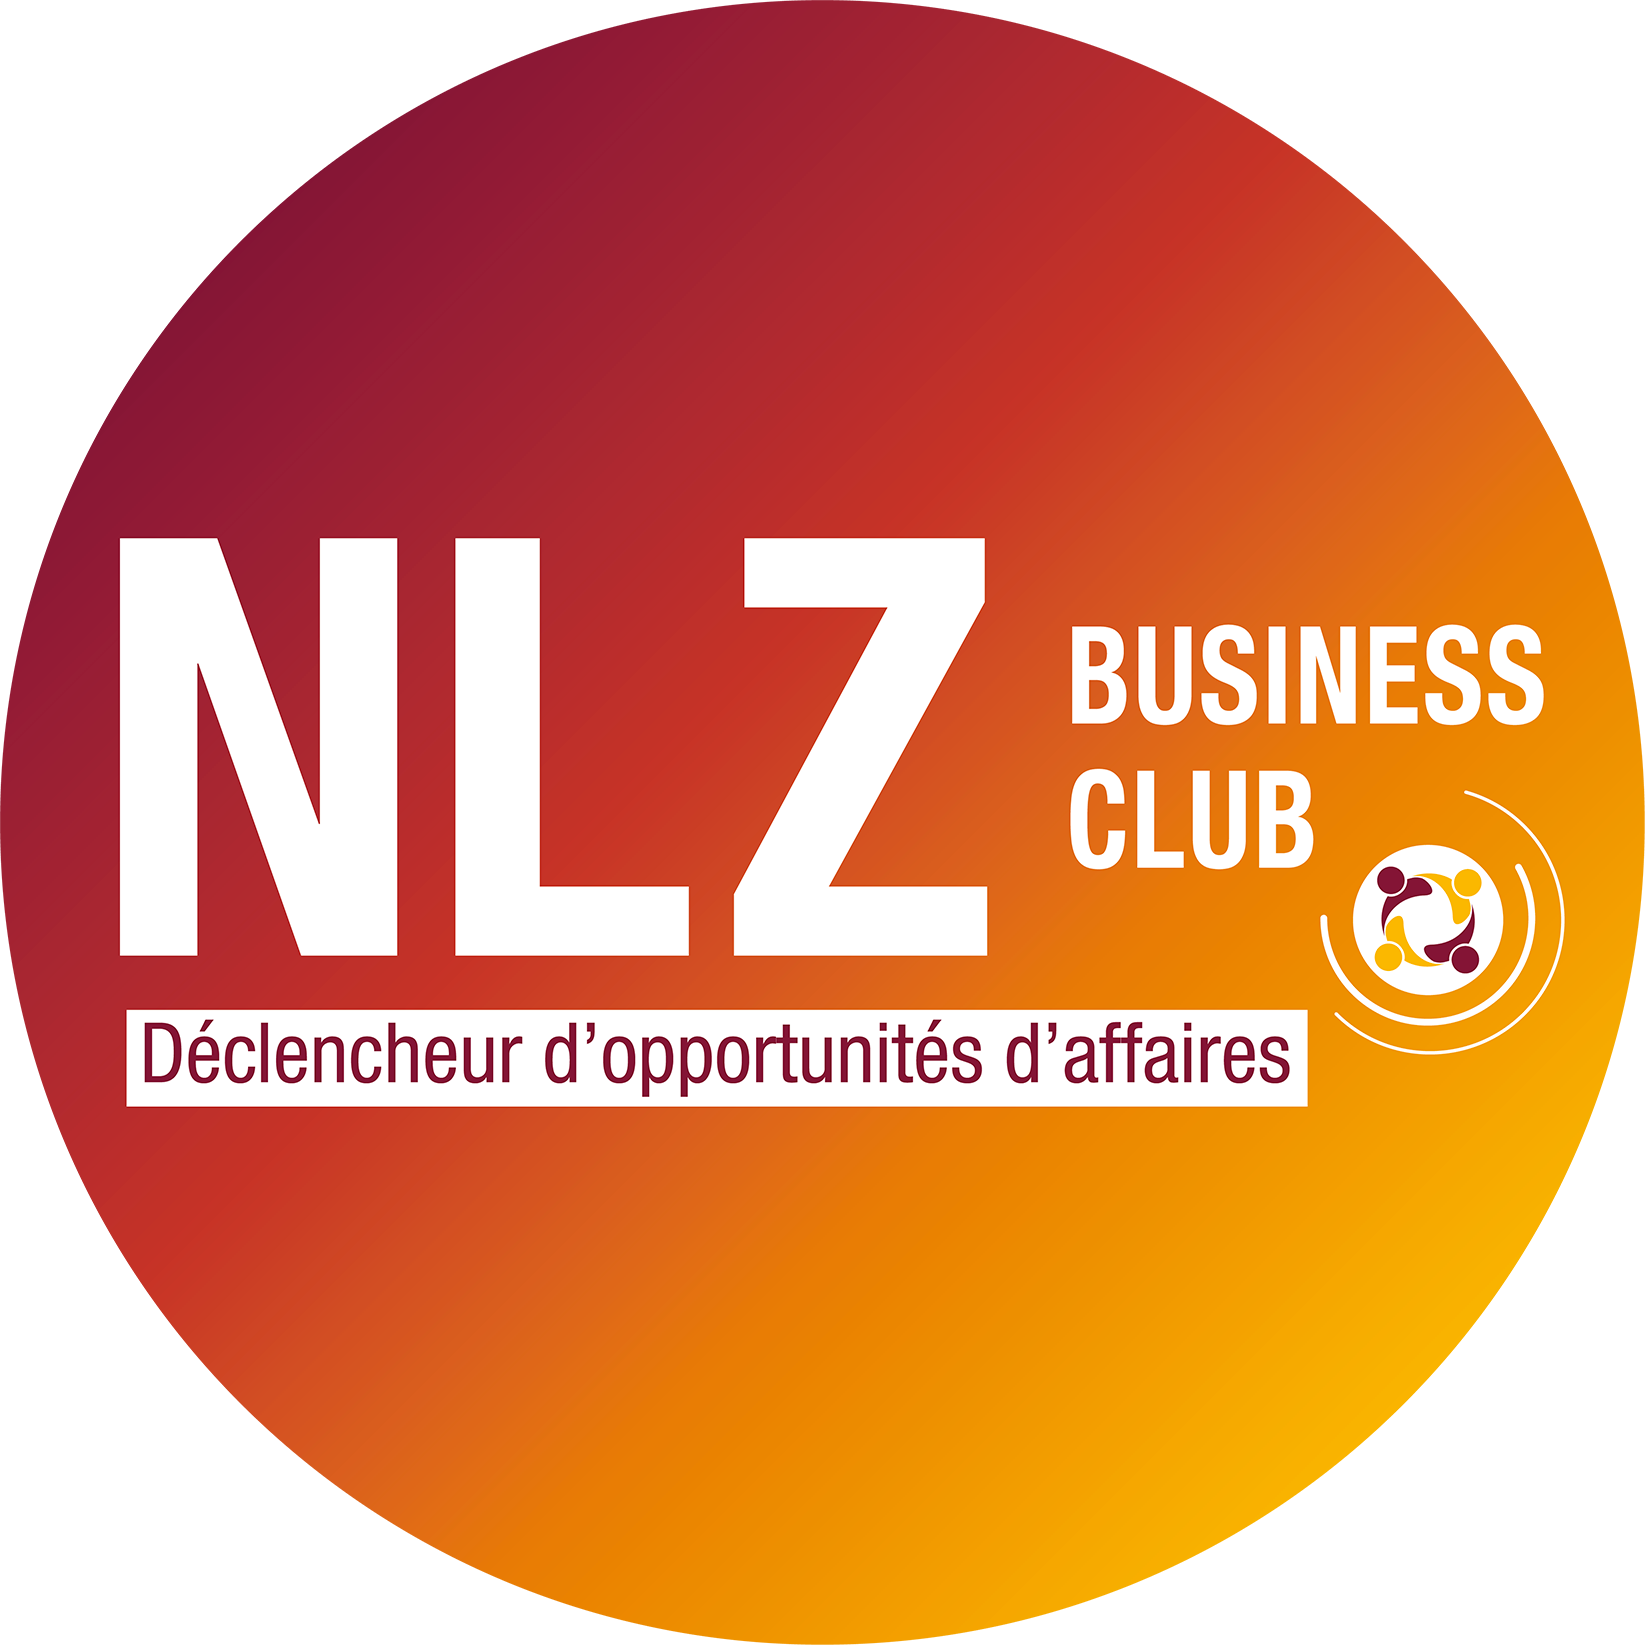 NLZ Business Club